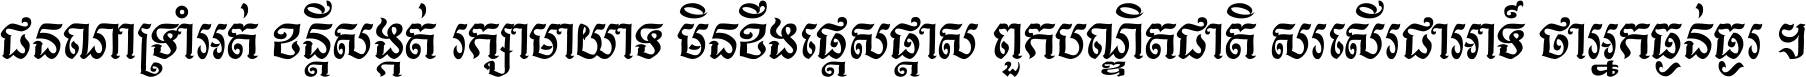 Khmer OS Pheatra C1